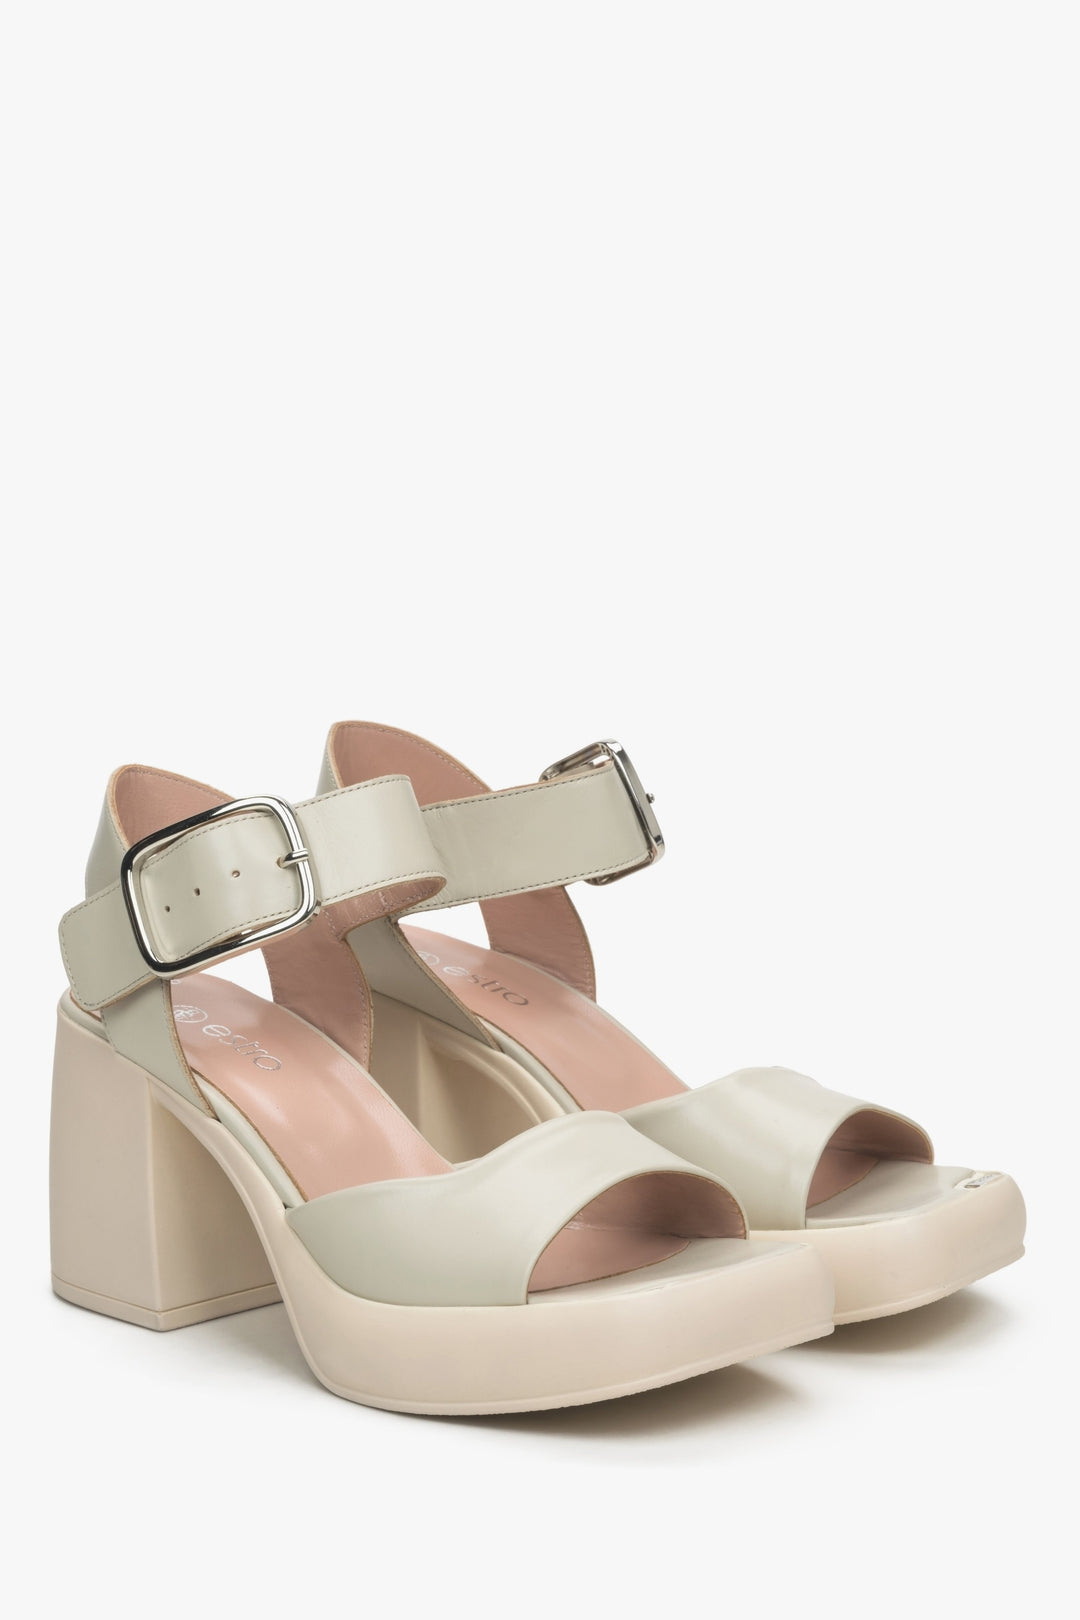 Women's beige-grey leather sandals with a block heel by Estro.